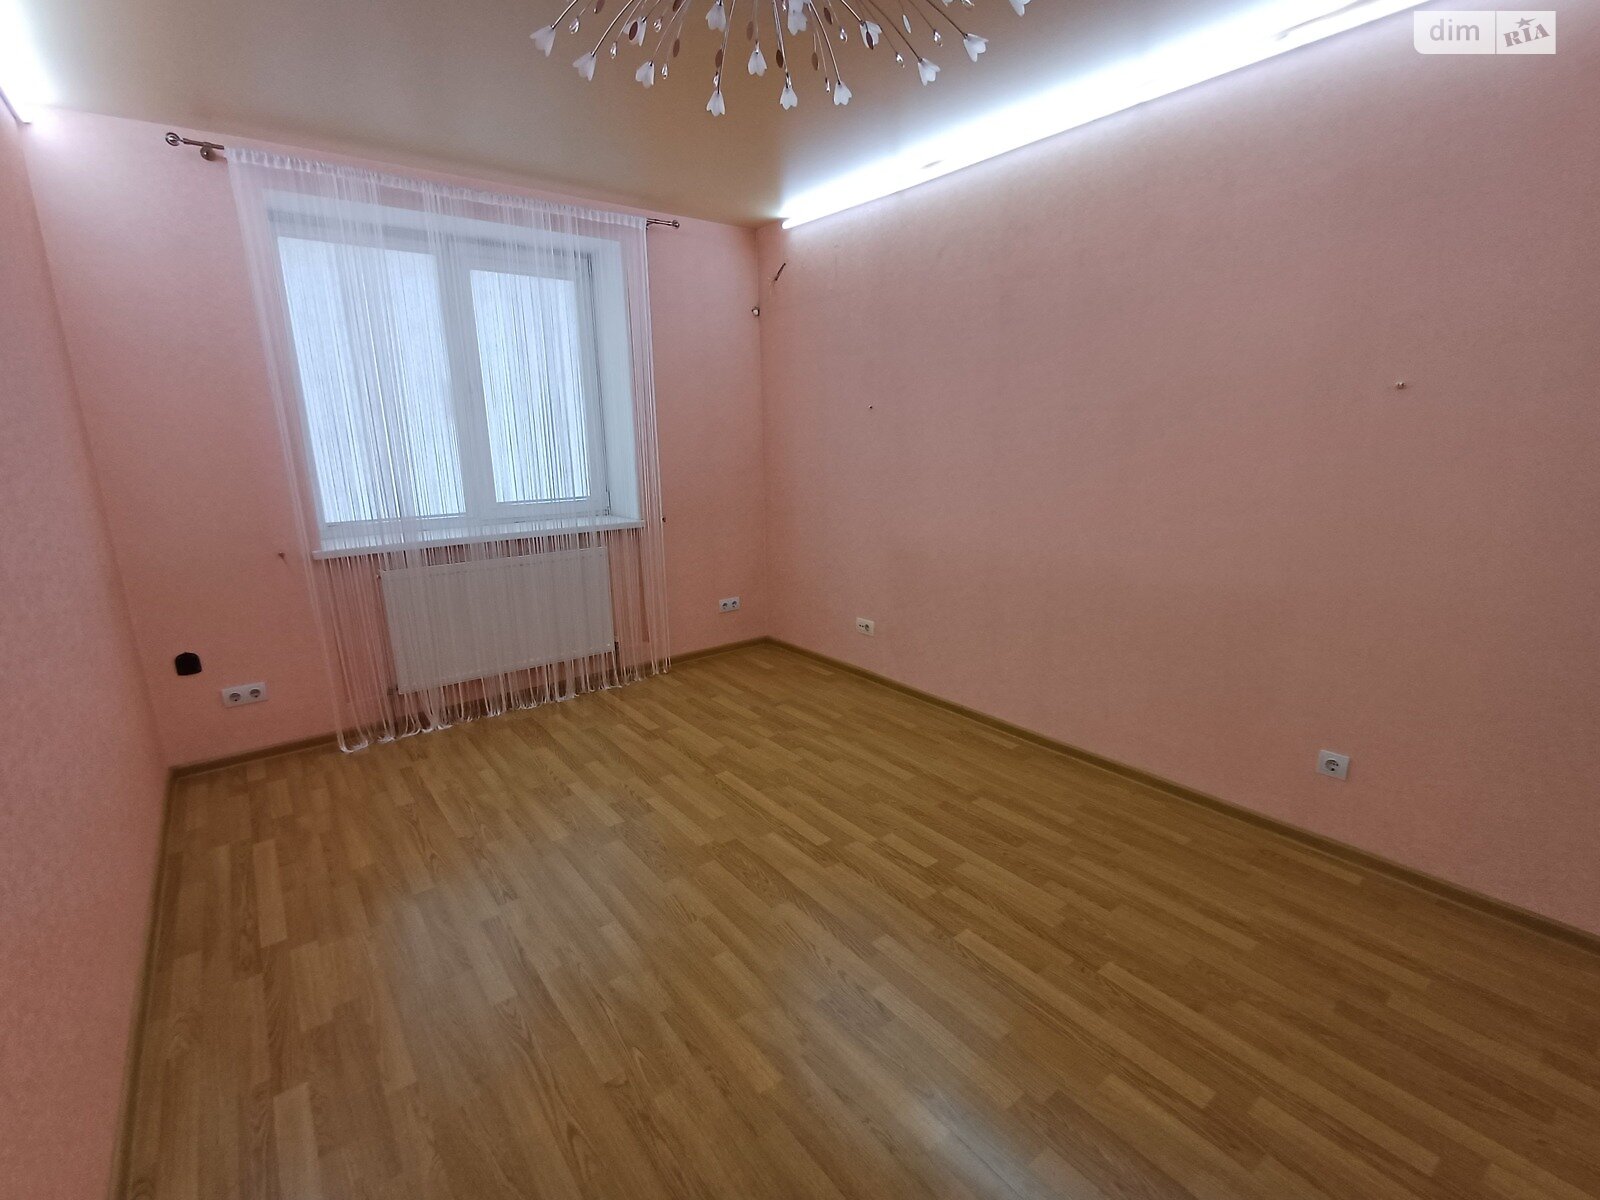 Продажа двухкомнатной квартиры в Днепре, на ул. Дмитрия Кедрина 53А, район Рабочая фото 1